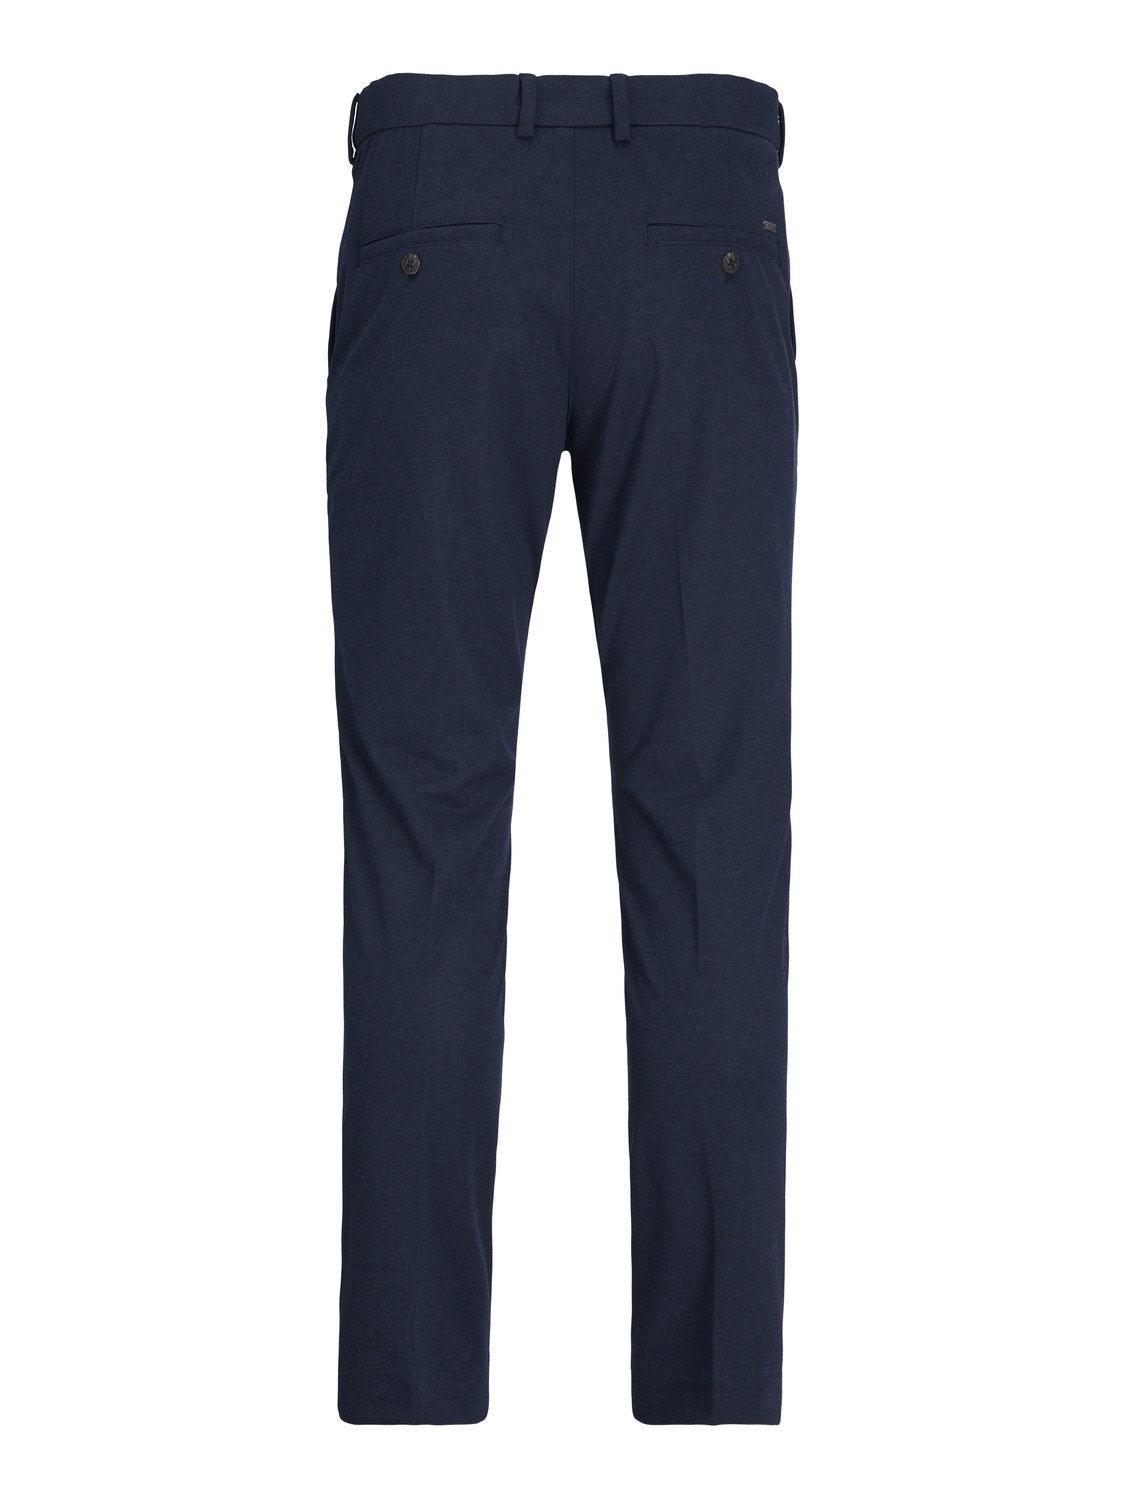 Jack & Jones Παντελόνι Slim Fit Chinos Μεγάλο μέγεθος -Navy Blazer - 12250503